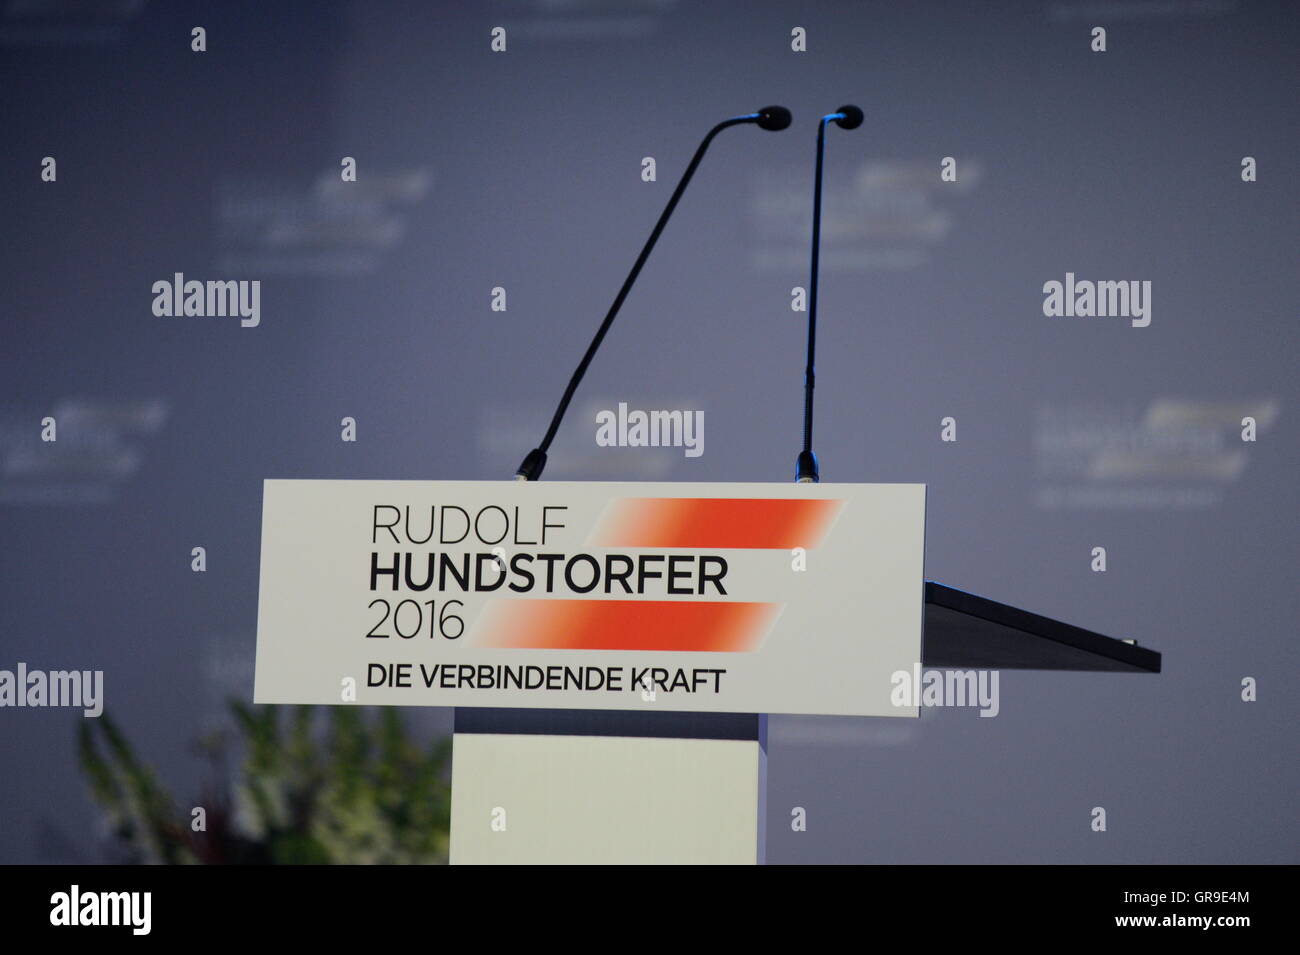 Lancement de campagnes intensives de Rudolf Hundstorfer Banque D'Images